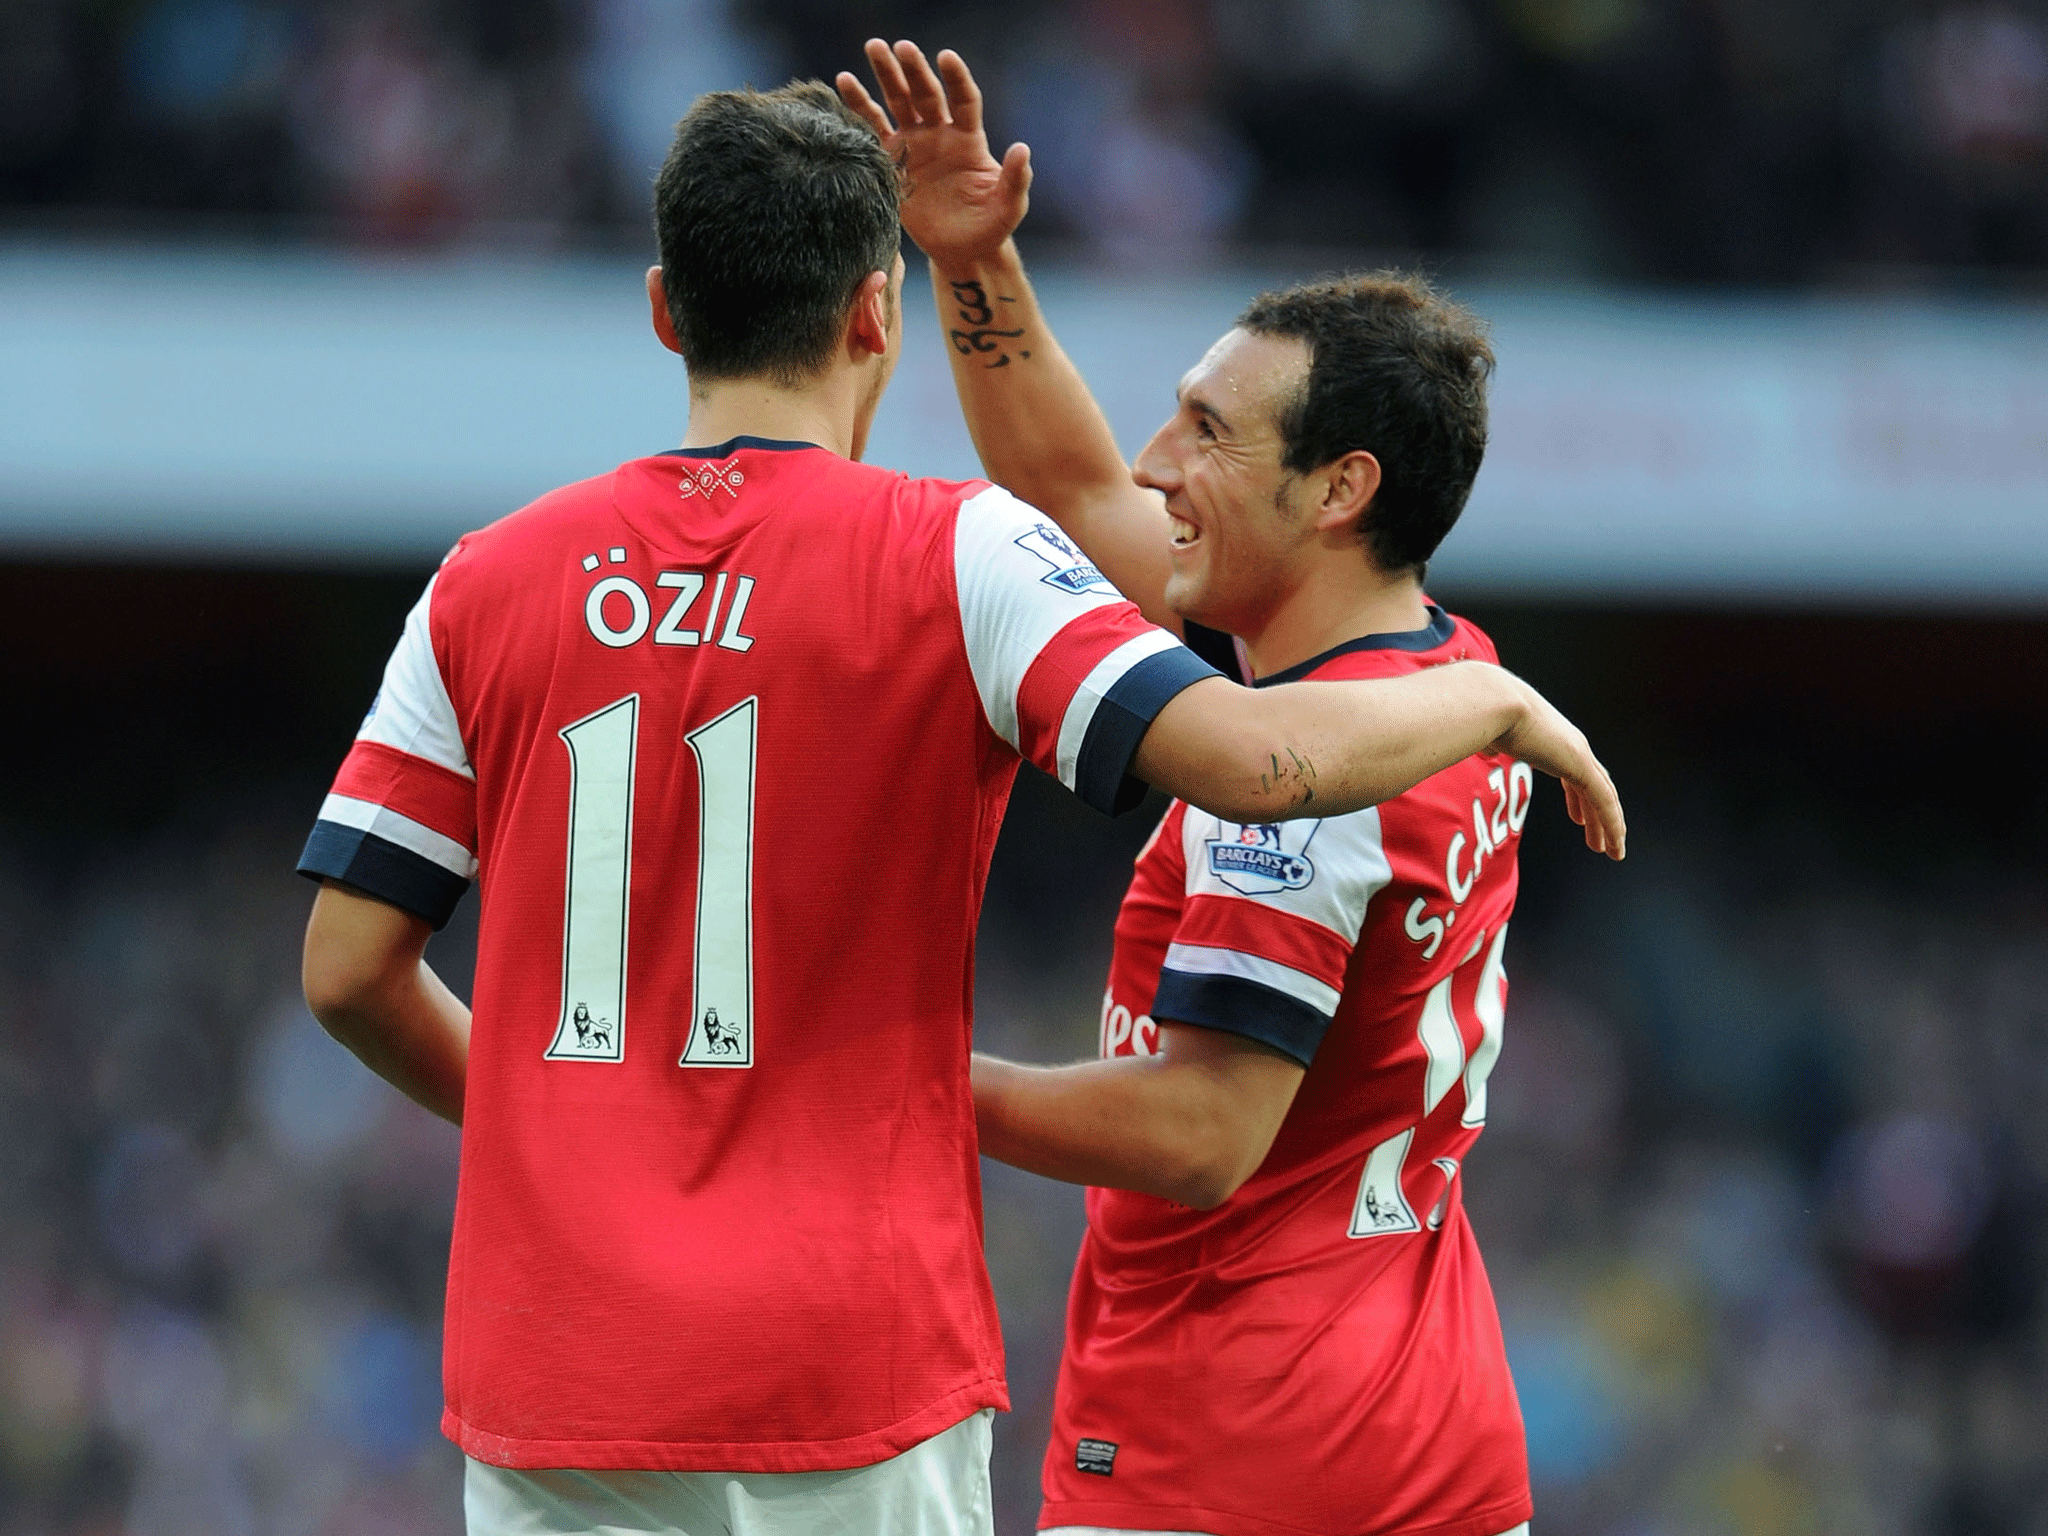 Mesut Oezil celebrates scoring Arsenal's 2nd goal with Santi Cazorla